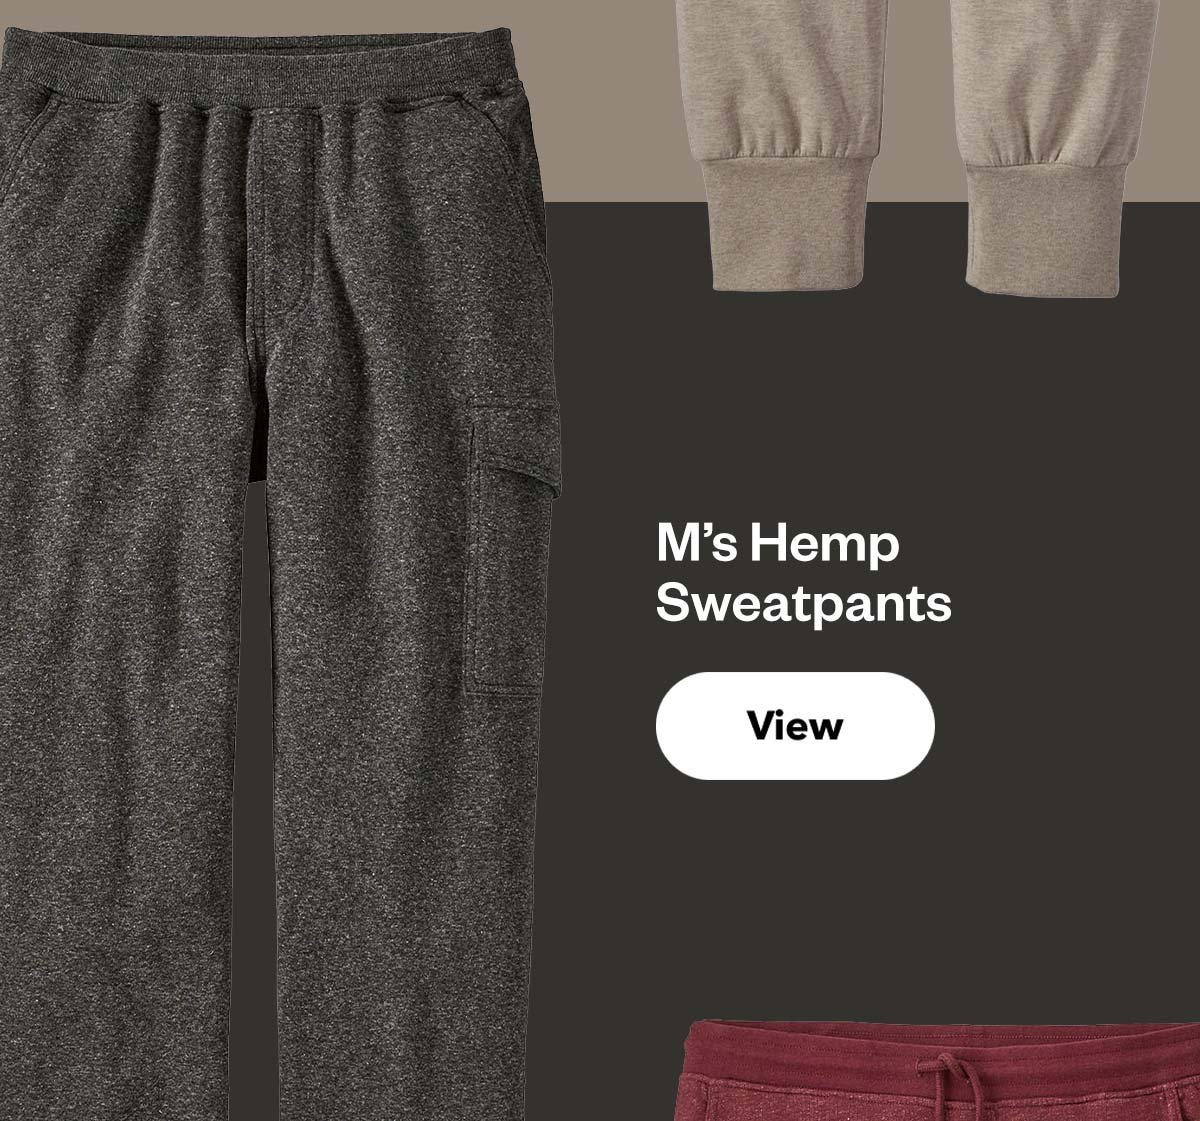 M’s Hemp Sweatpants